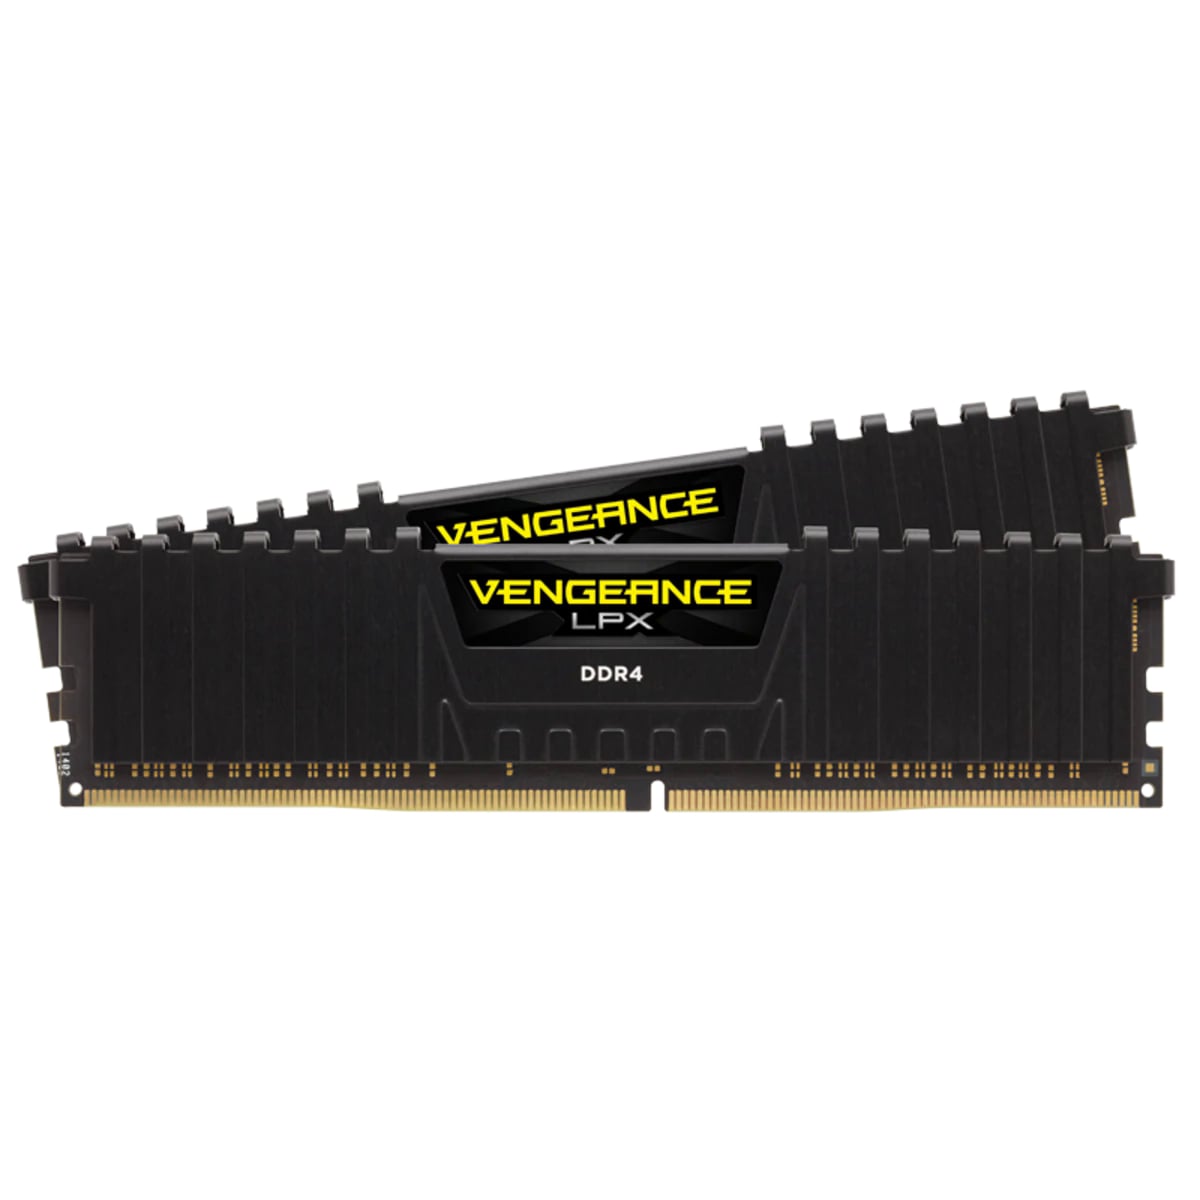 RAM CORSAIR VENGEANCE LPX 16GB (2x8GB) DDR4 3000MHz - CMK16GX4M2D3000C16 - songphuong.vn